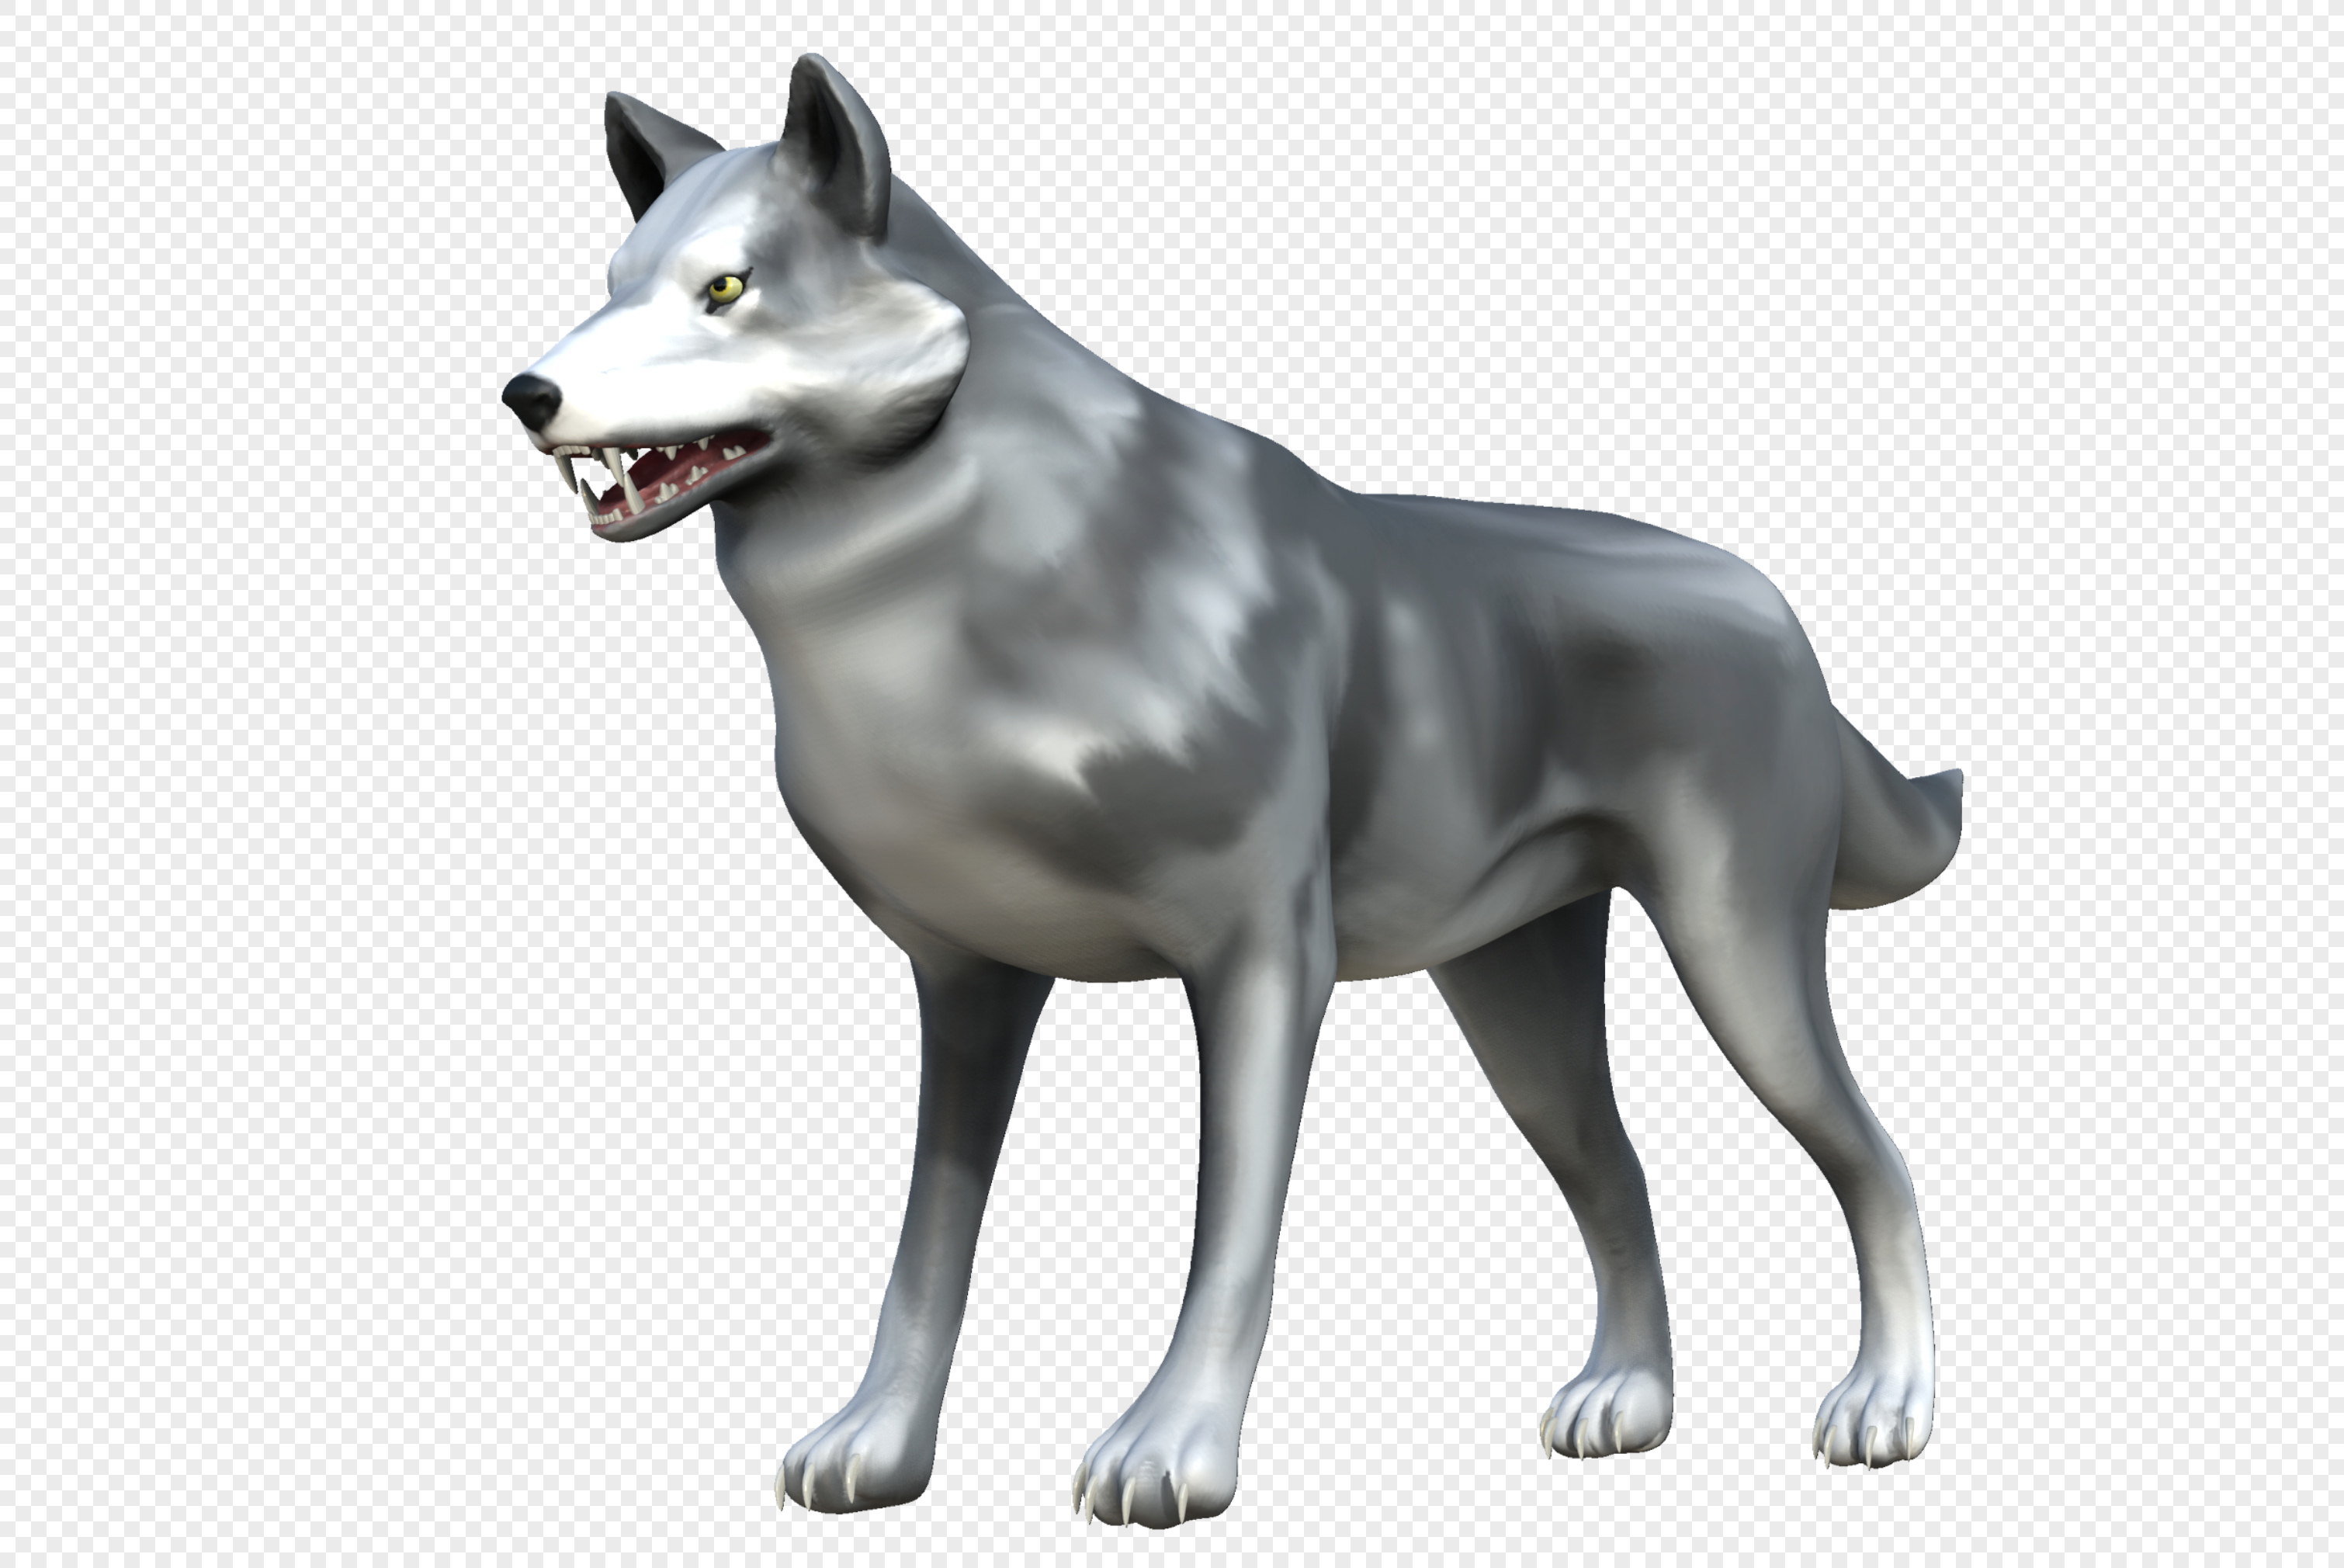 wolf 3d freeware